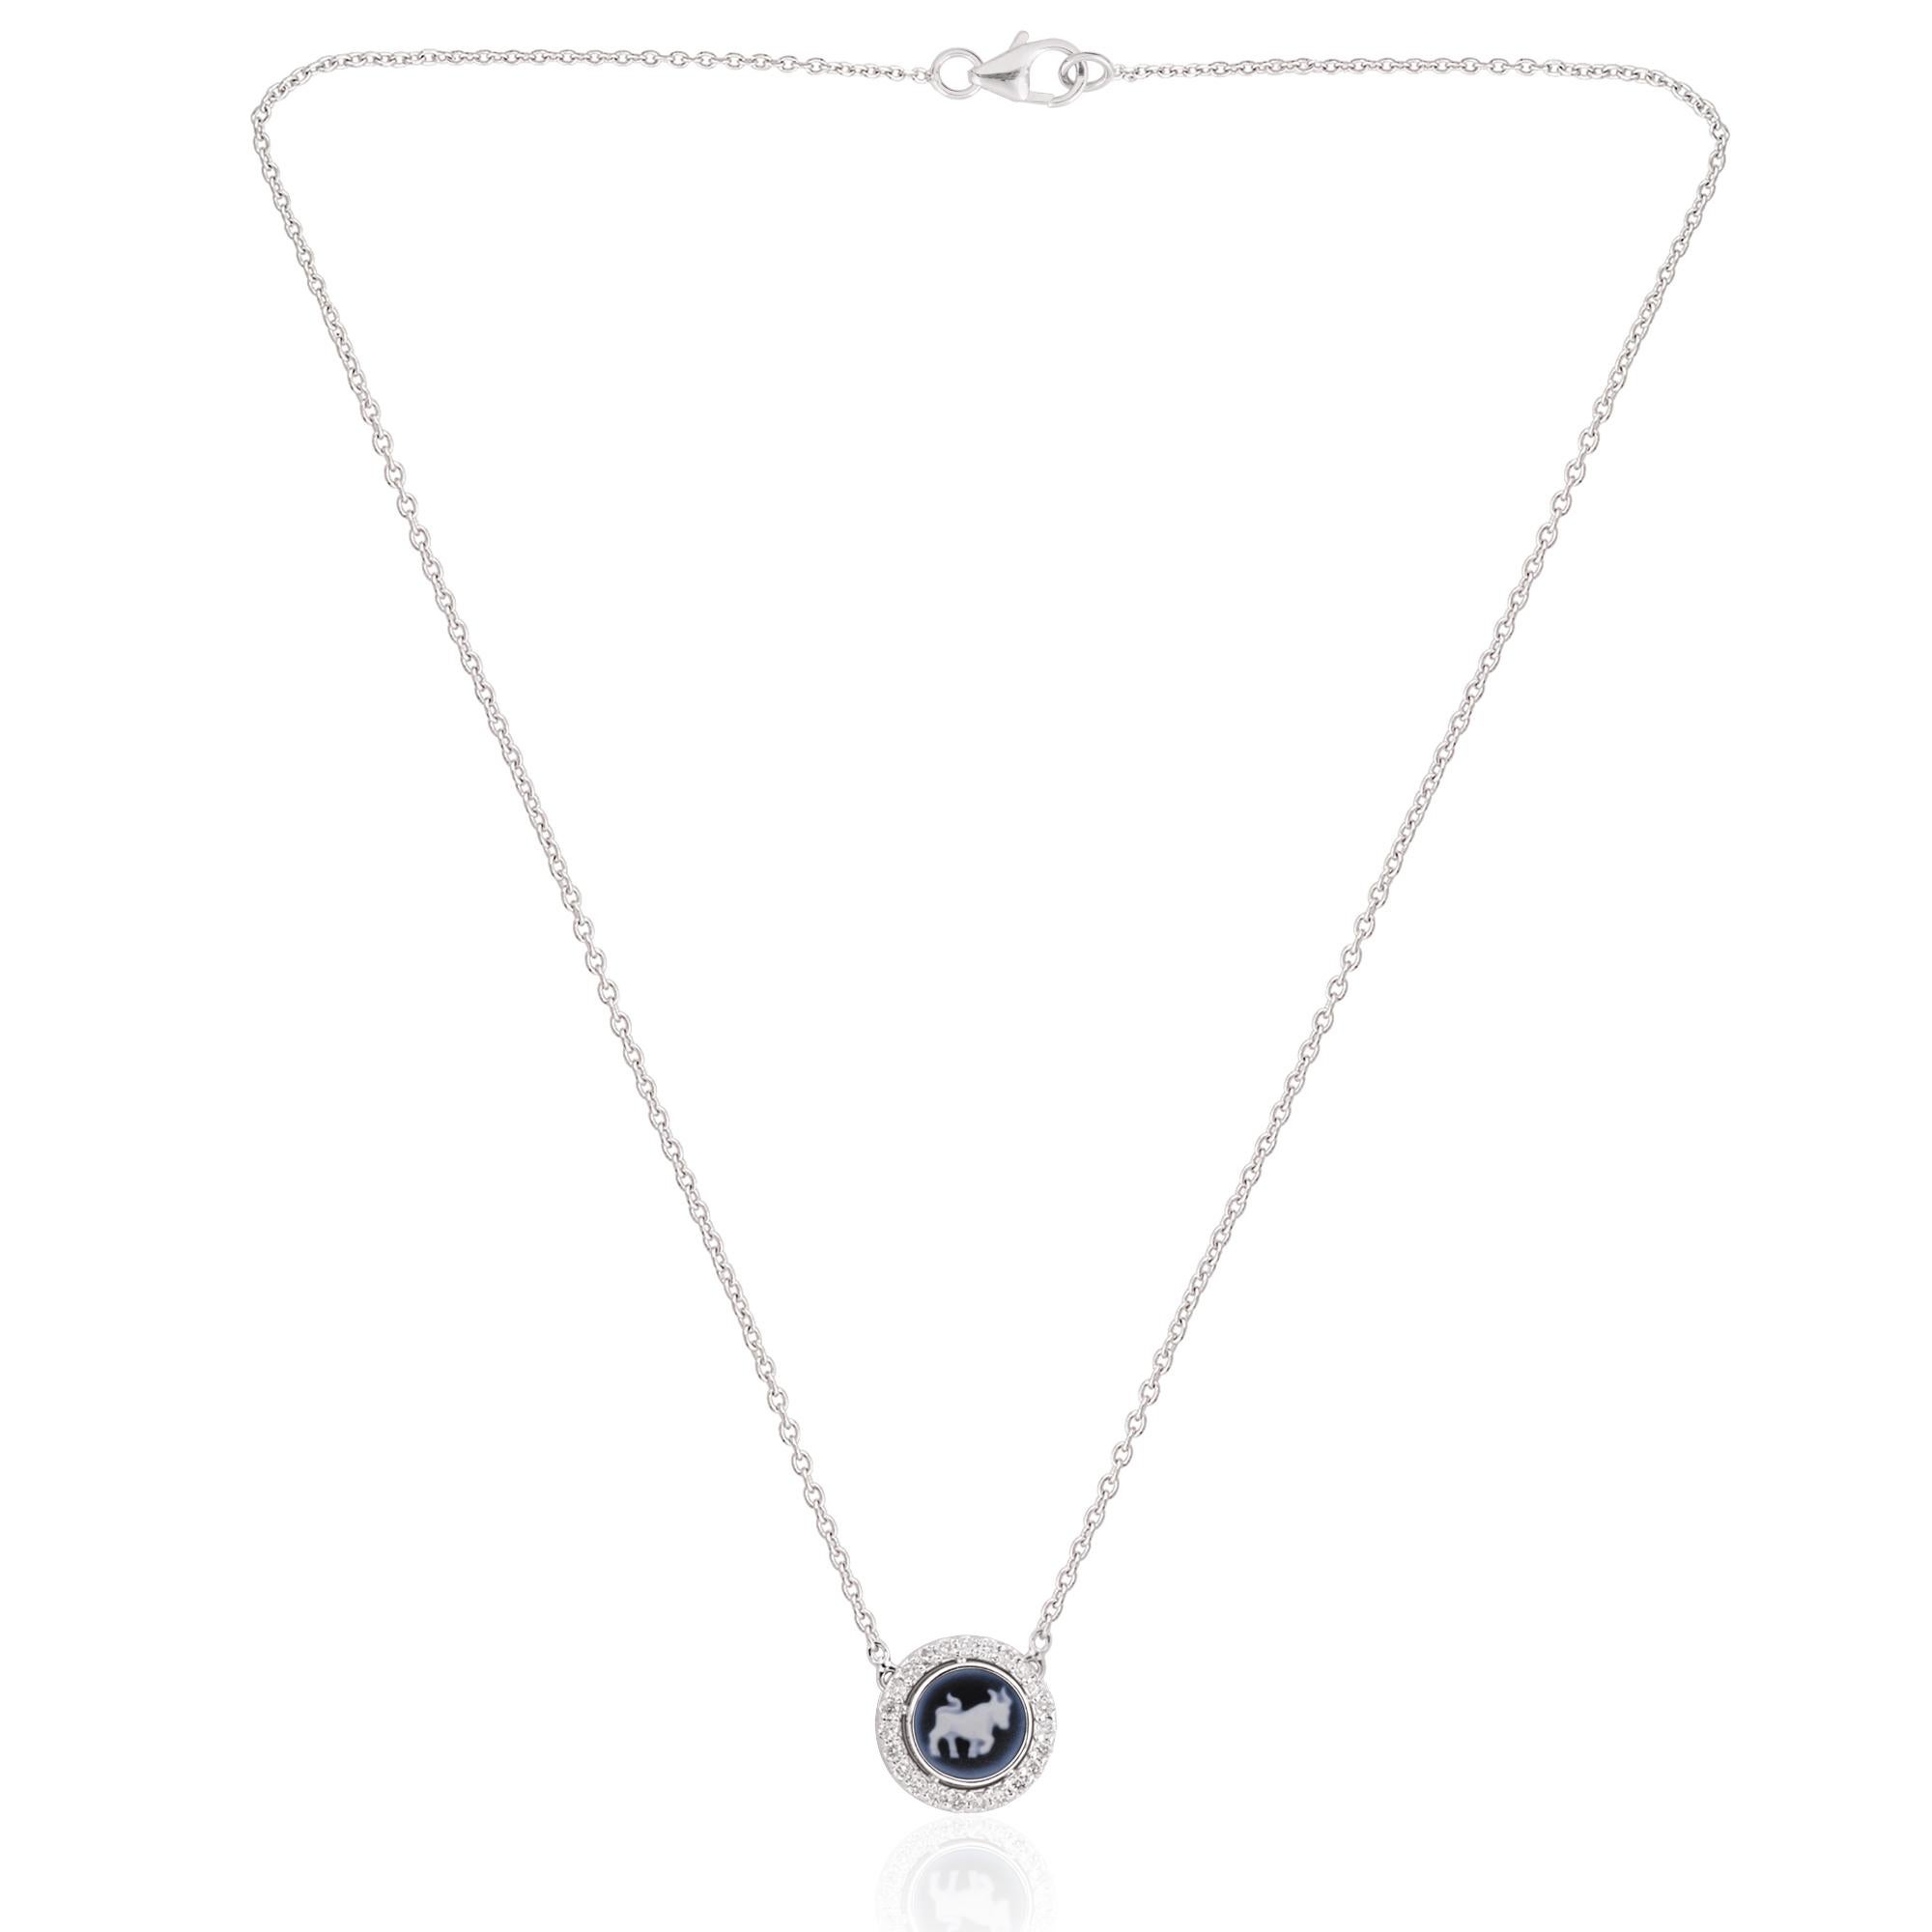 Taurus Zodiac Sign H/SI Pave Diamond Pendant 14k White Gold Necklace 1.16 Tcw For Sale 1